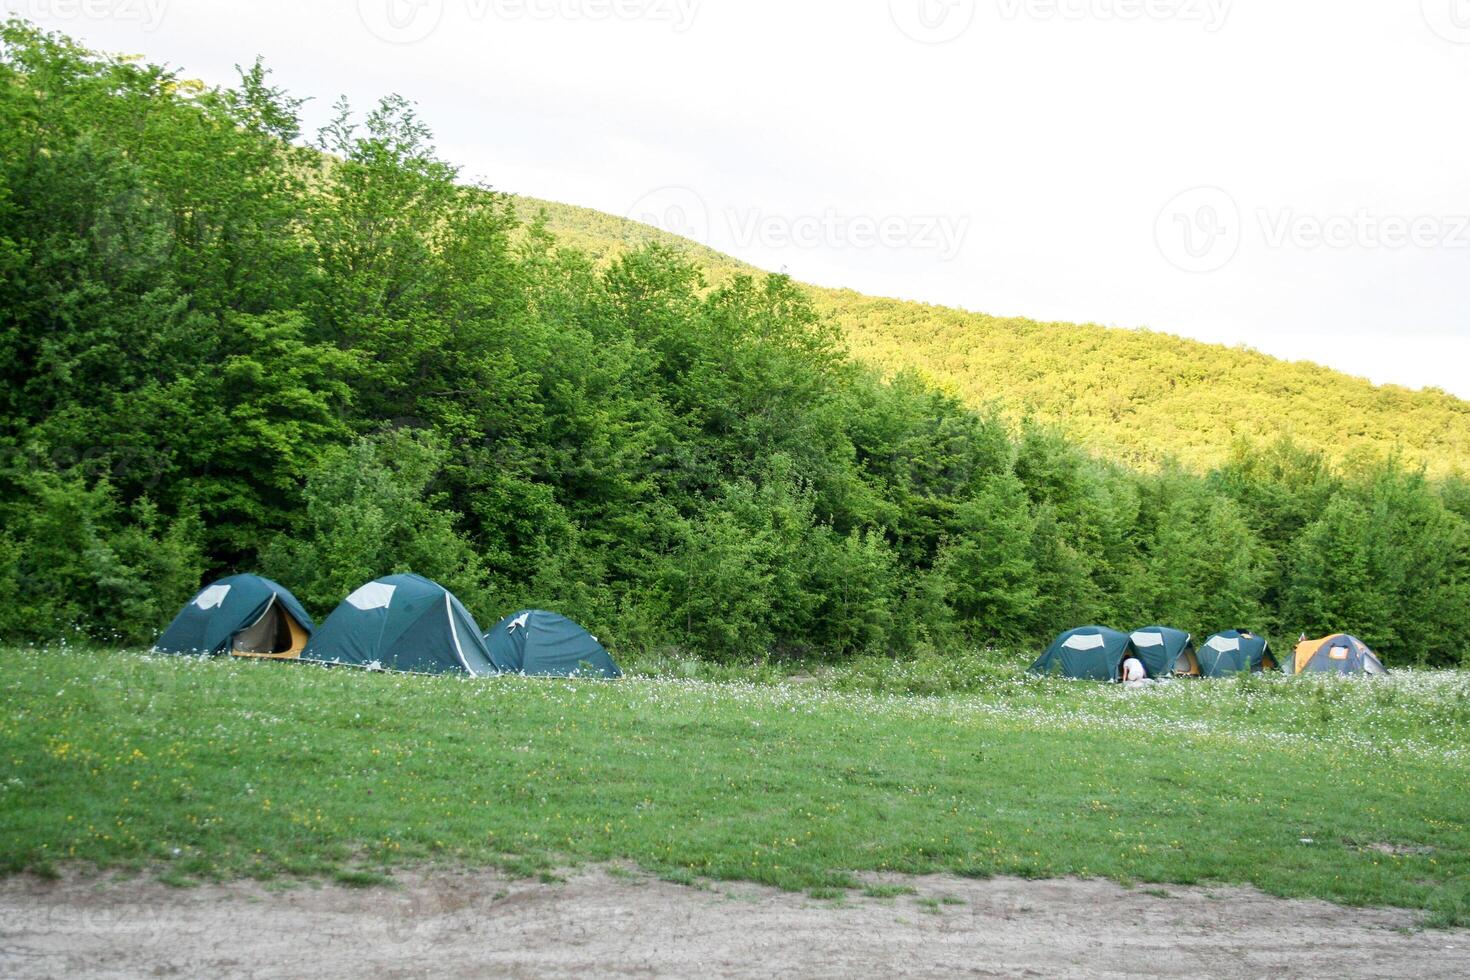 toerist tenten in Woud Bij camping foto